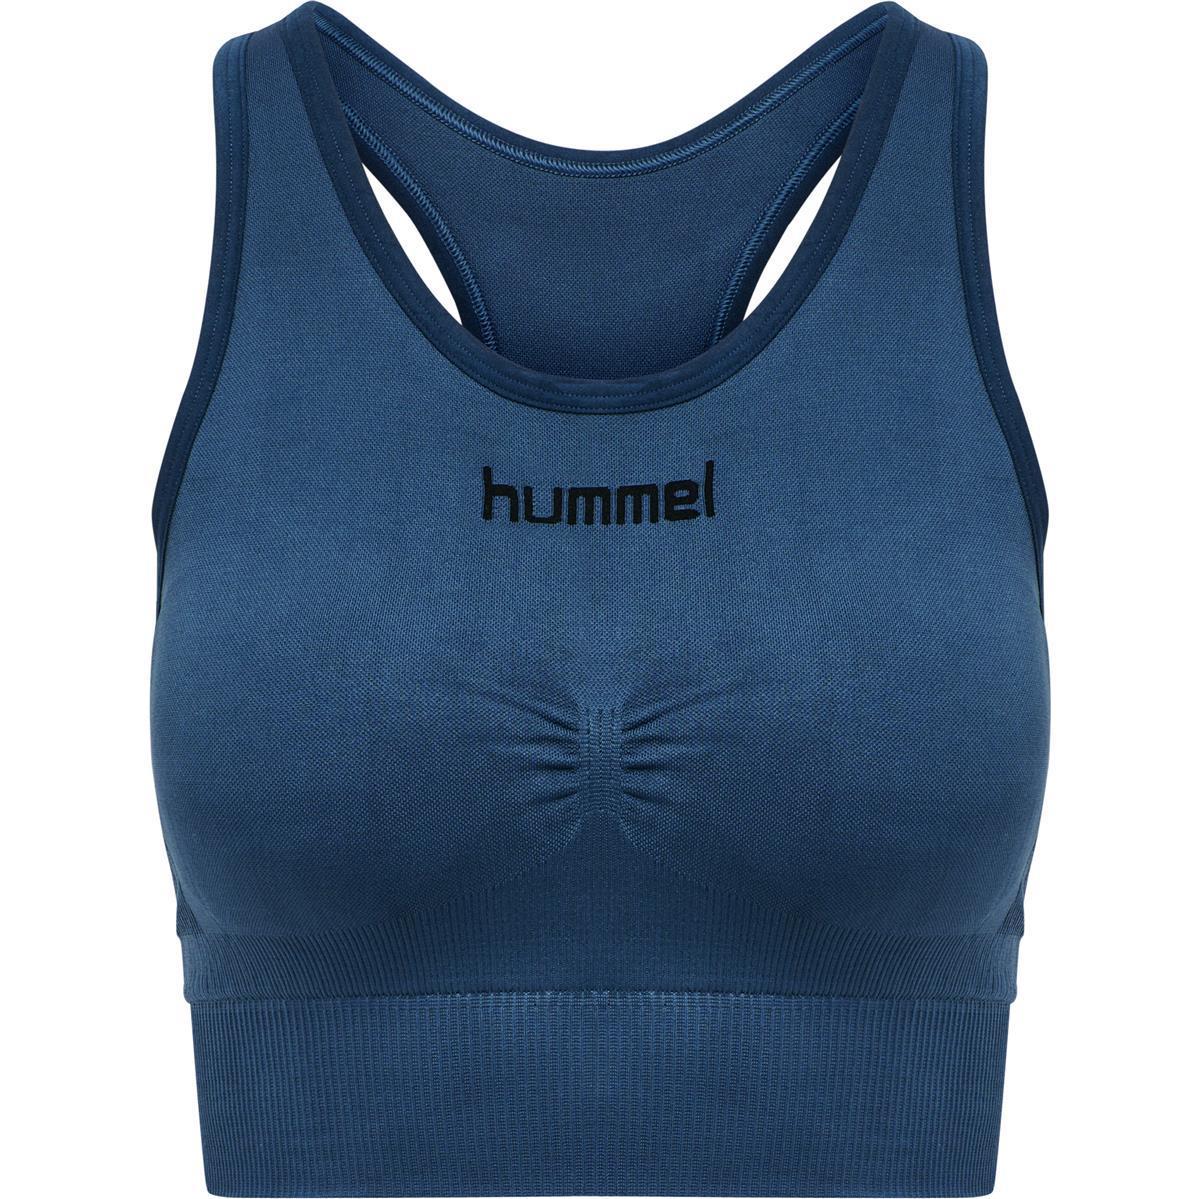 Hummel HUMMEL FIRST SEAMLESS BRA WOMAN - DARK DENIM - XL-2X